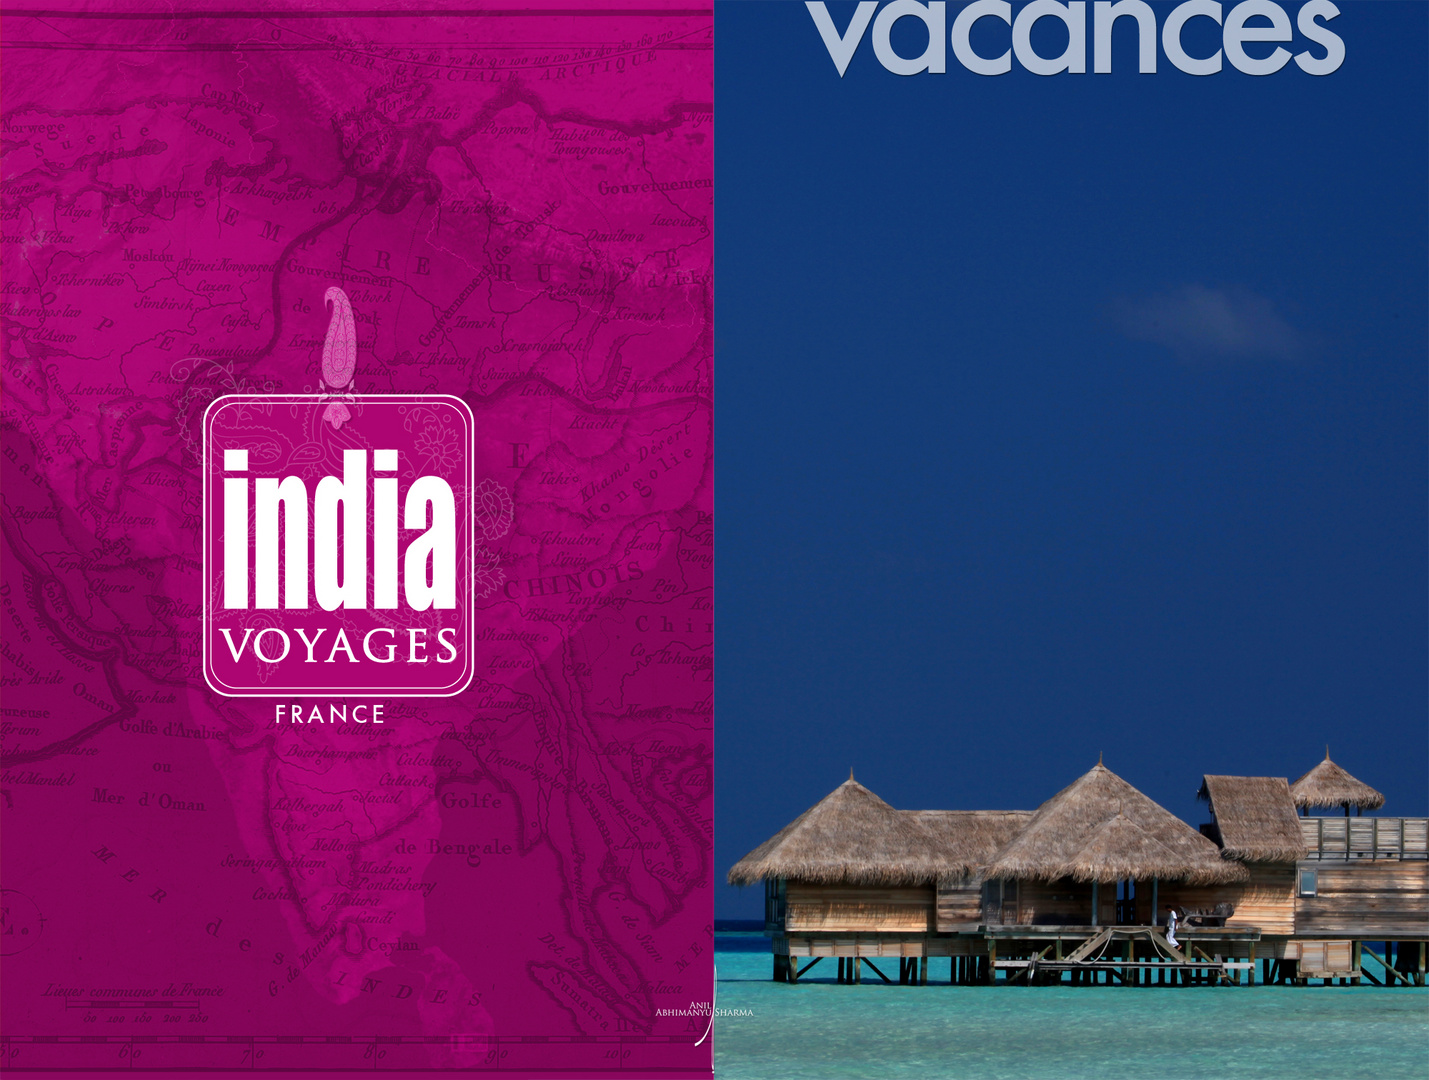 India Voyages France_Vacances ;)